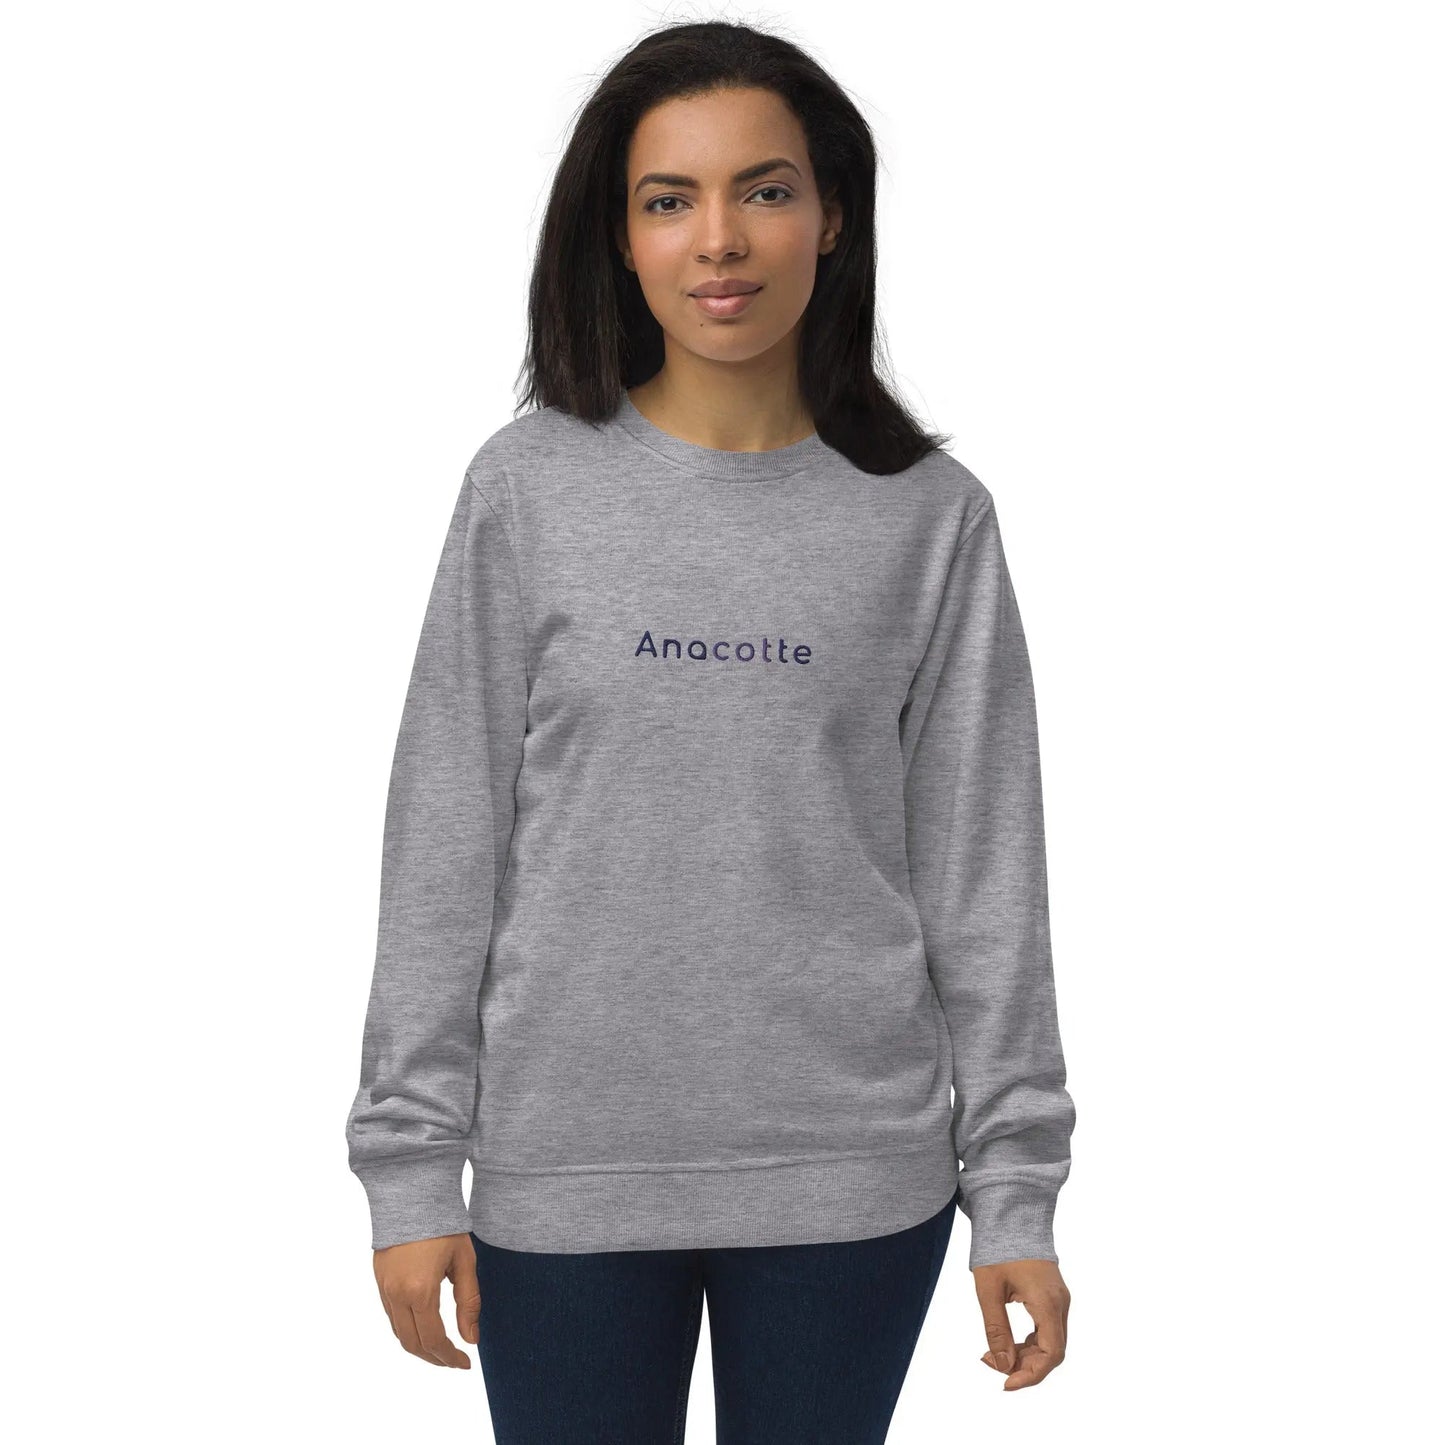 Anacotte Unisex organic sweatshirt-2